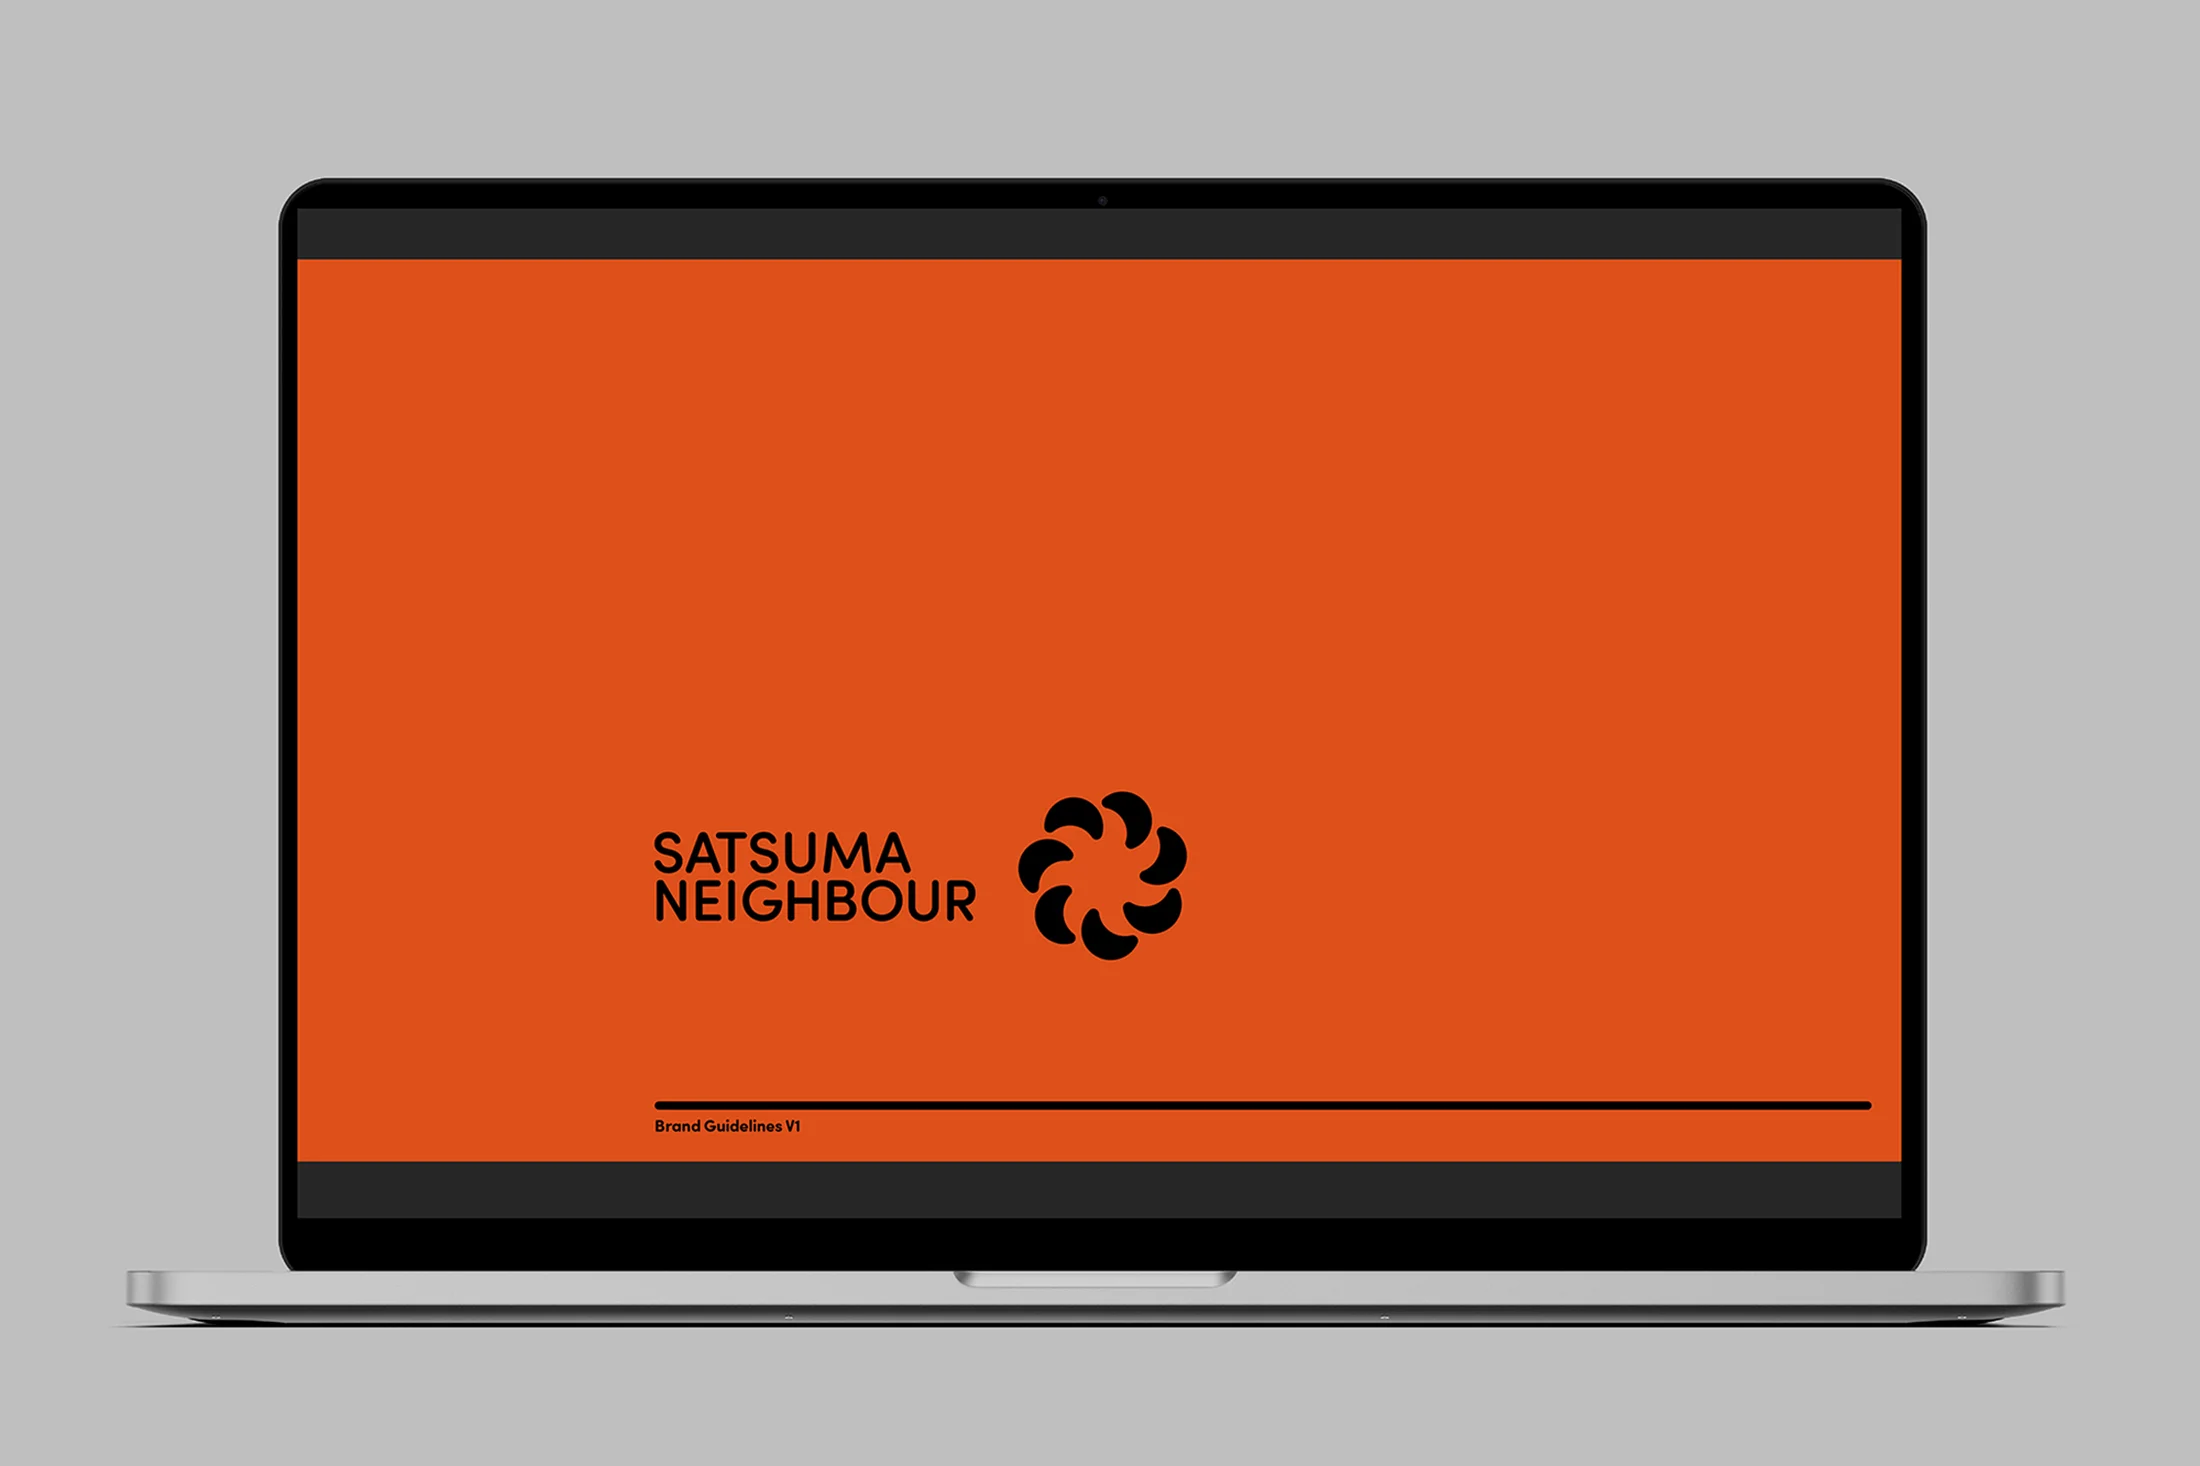 paul_belford_ltd_satsuma_neighbour_logo.webp